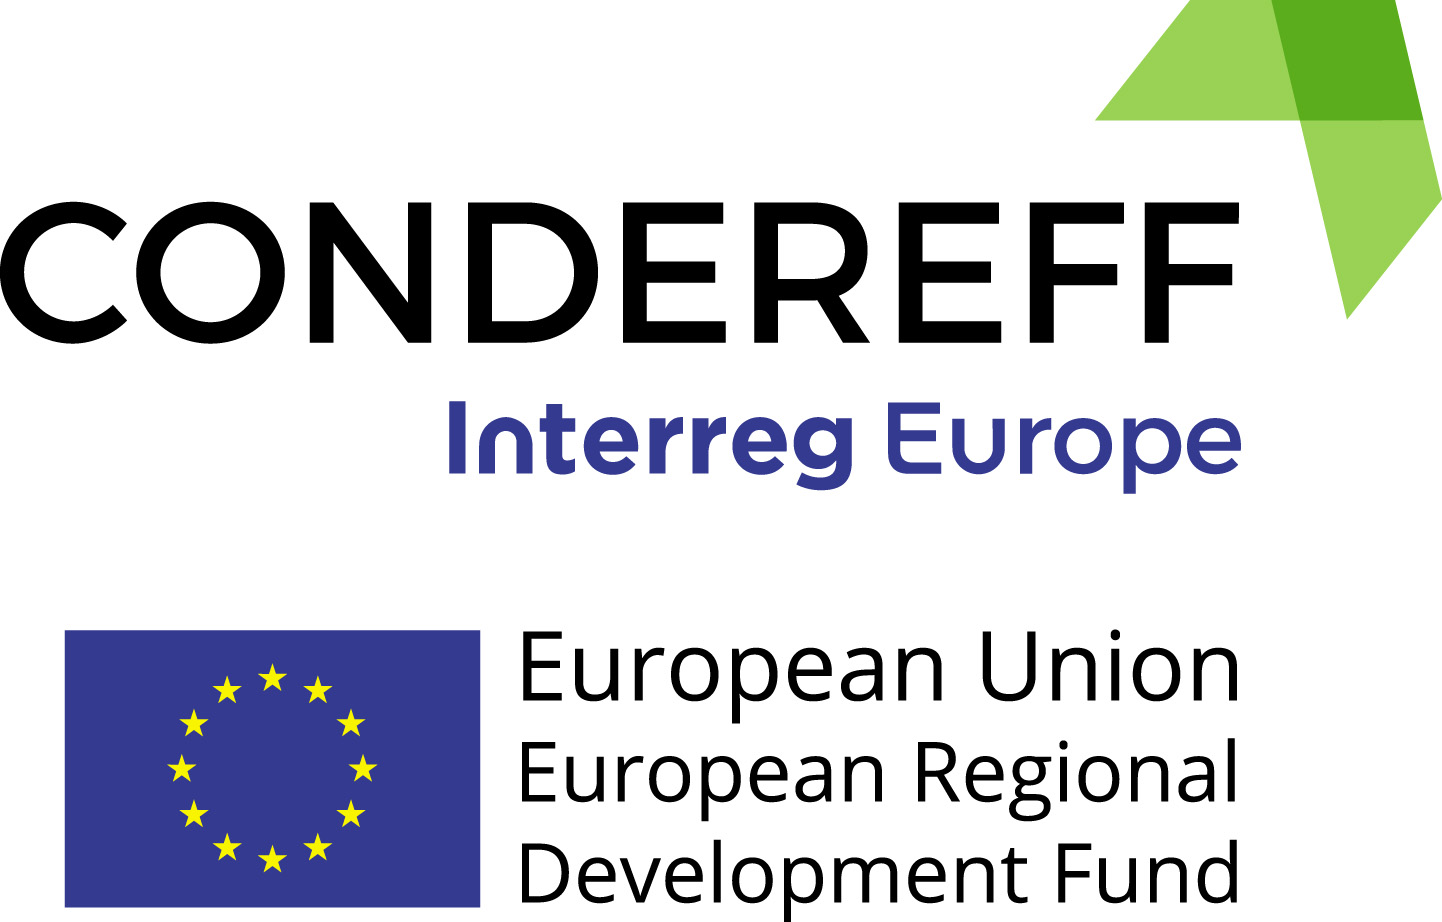 CONDEREFF-Interreg EUROPE 